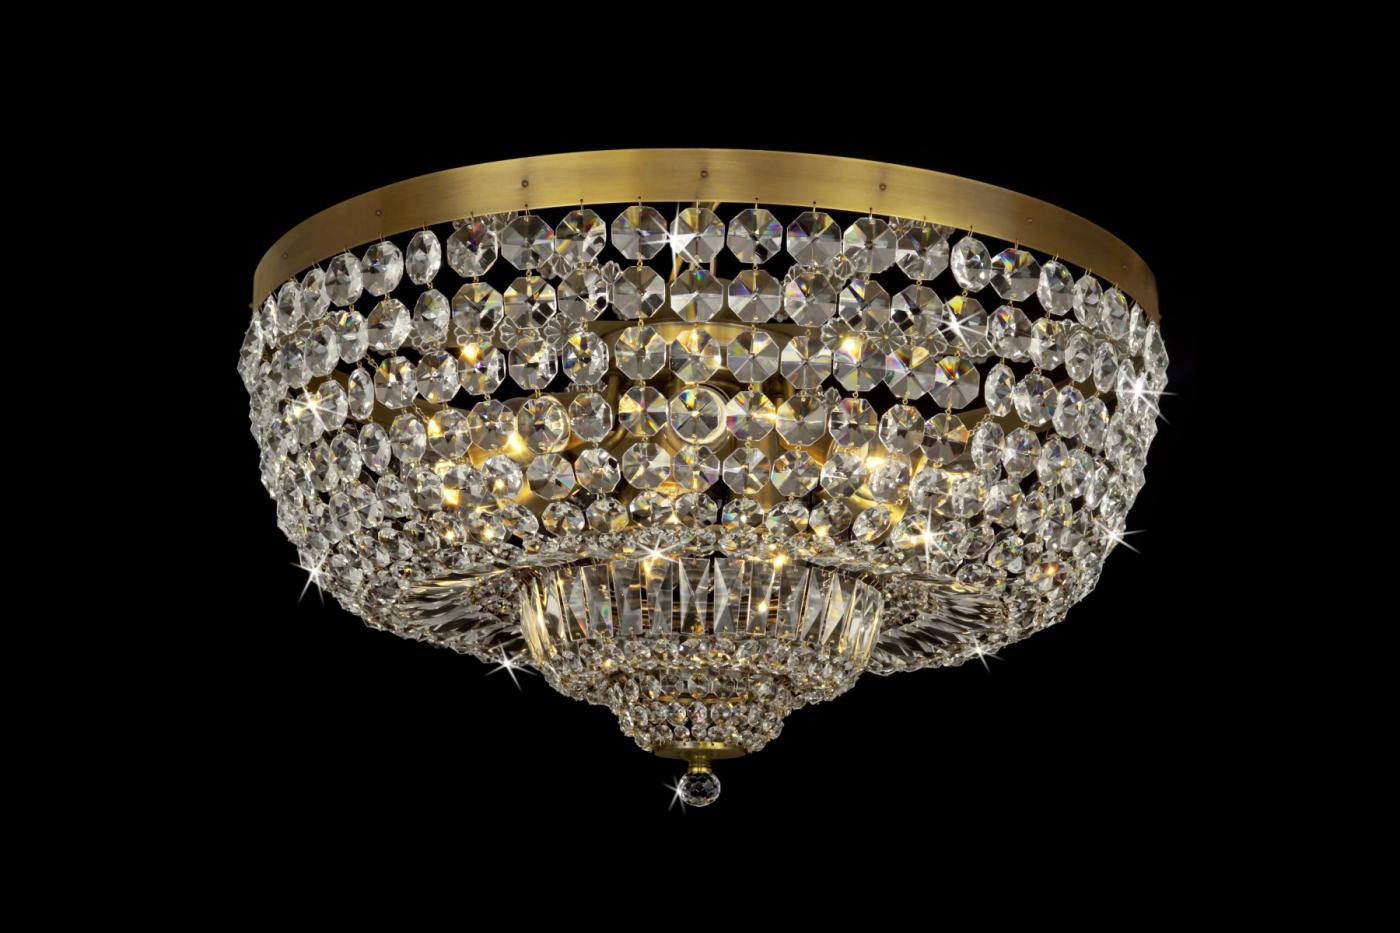 Kristall Kronleuchter - Crystal chandelier EX6080 12/102A-115S